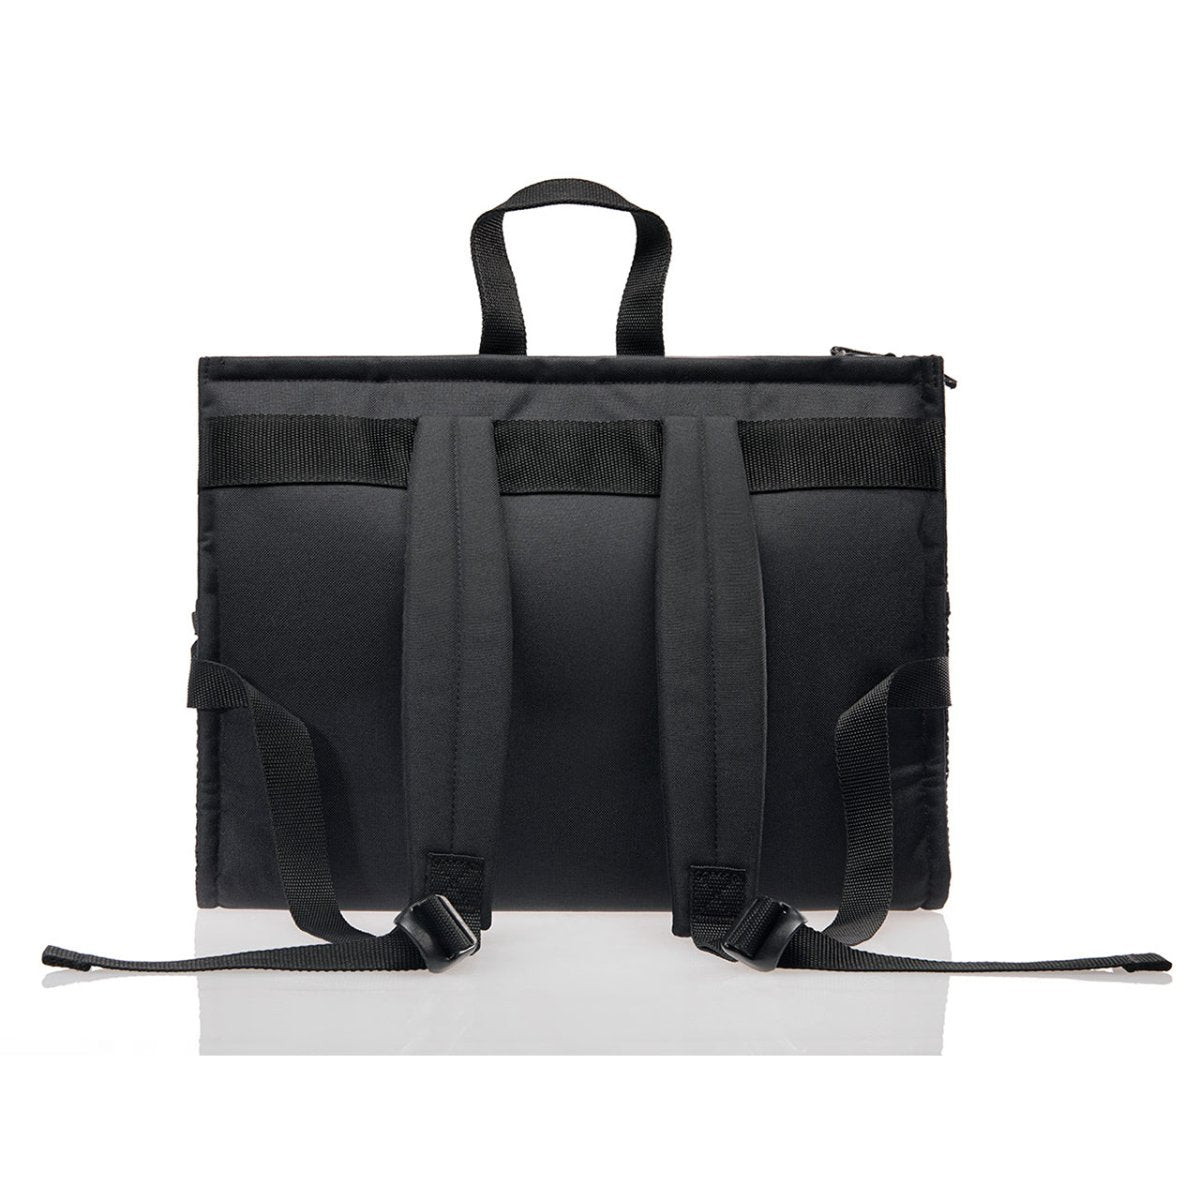 Eastpak x Telfar Medium Shopper Bag (Schwarz)  - Allike Store